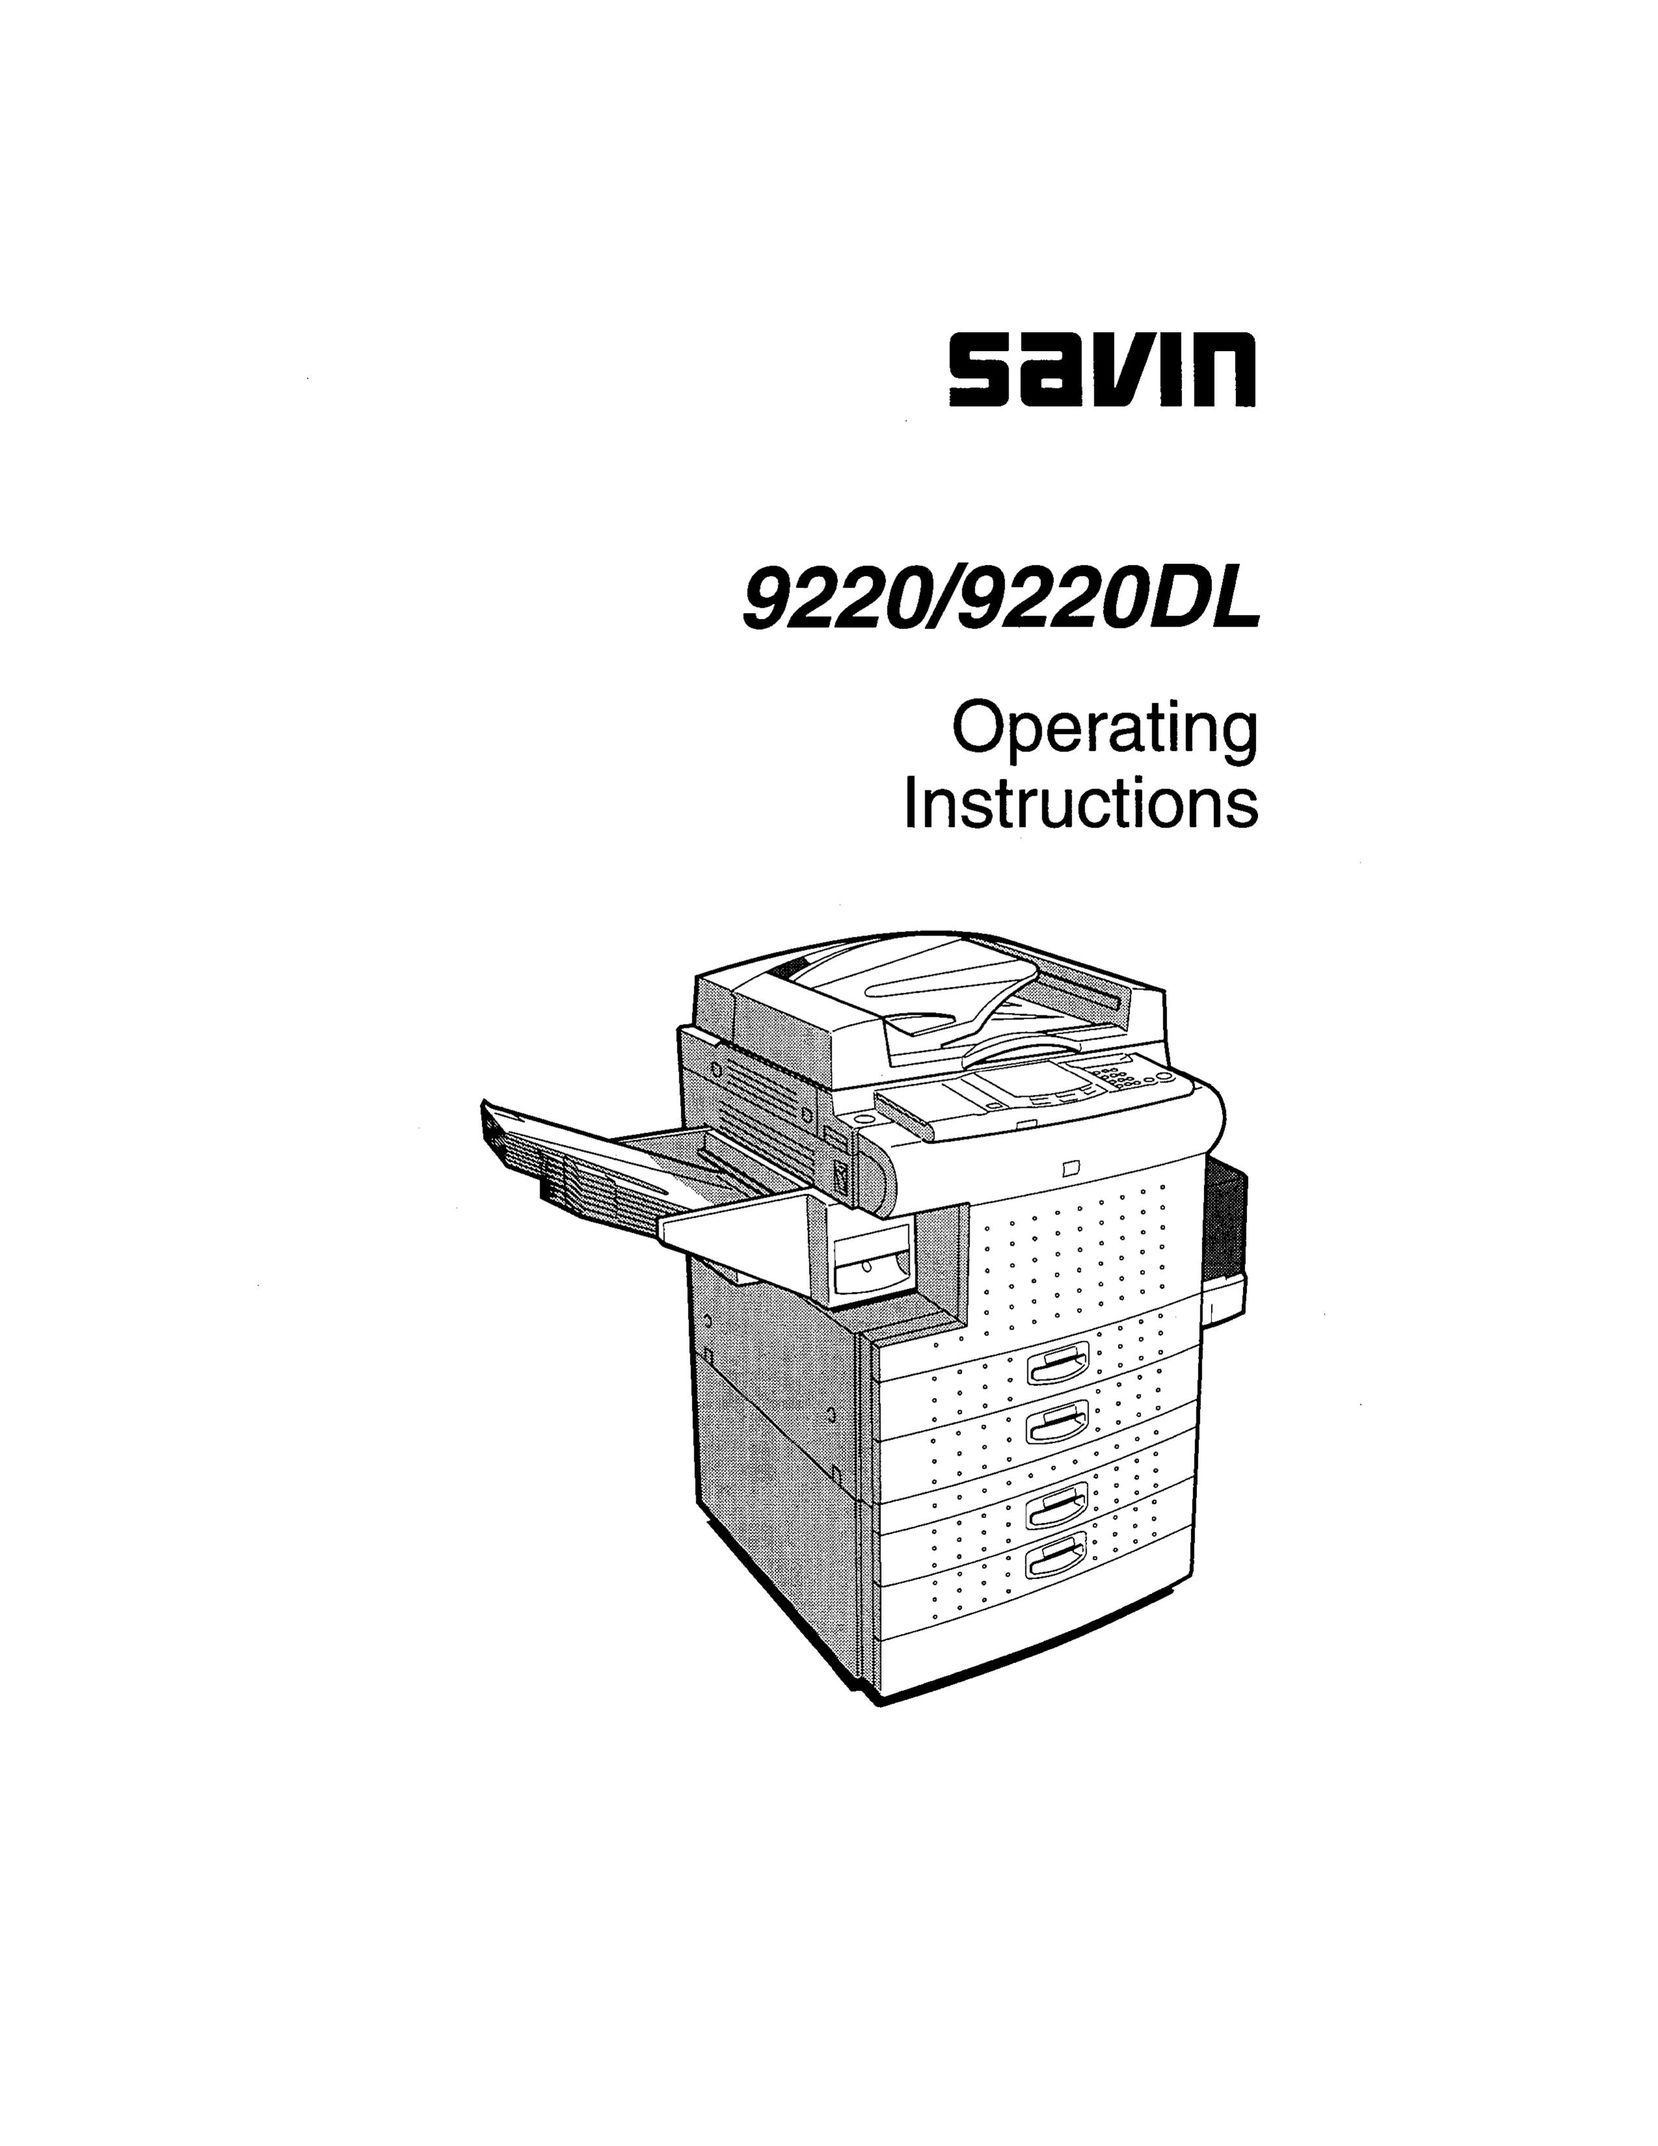 Savin 9220 All in One Printer User Manual